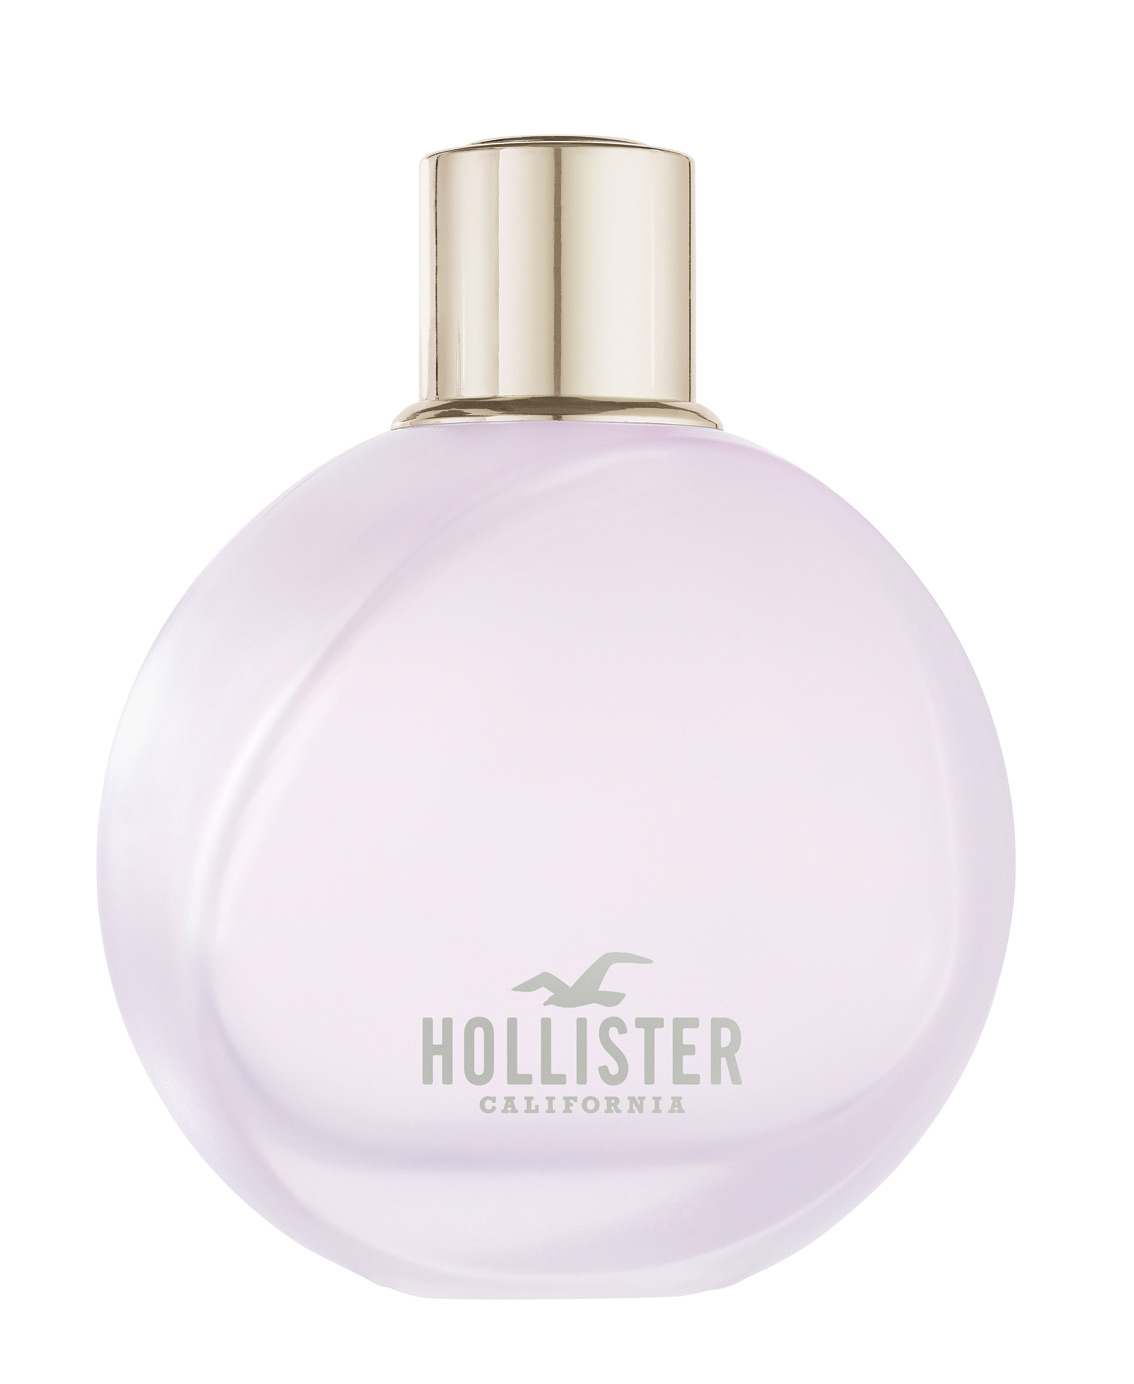 Free Wave For Her Hollister parfum - un 